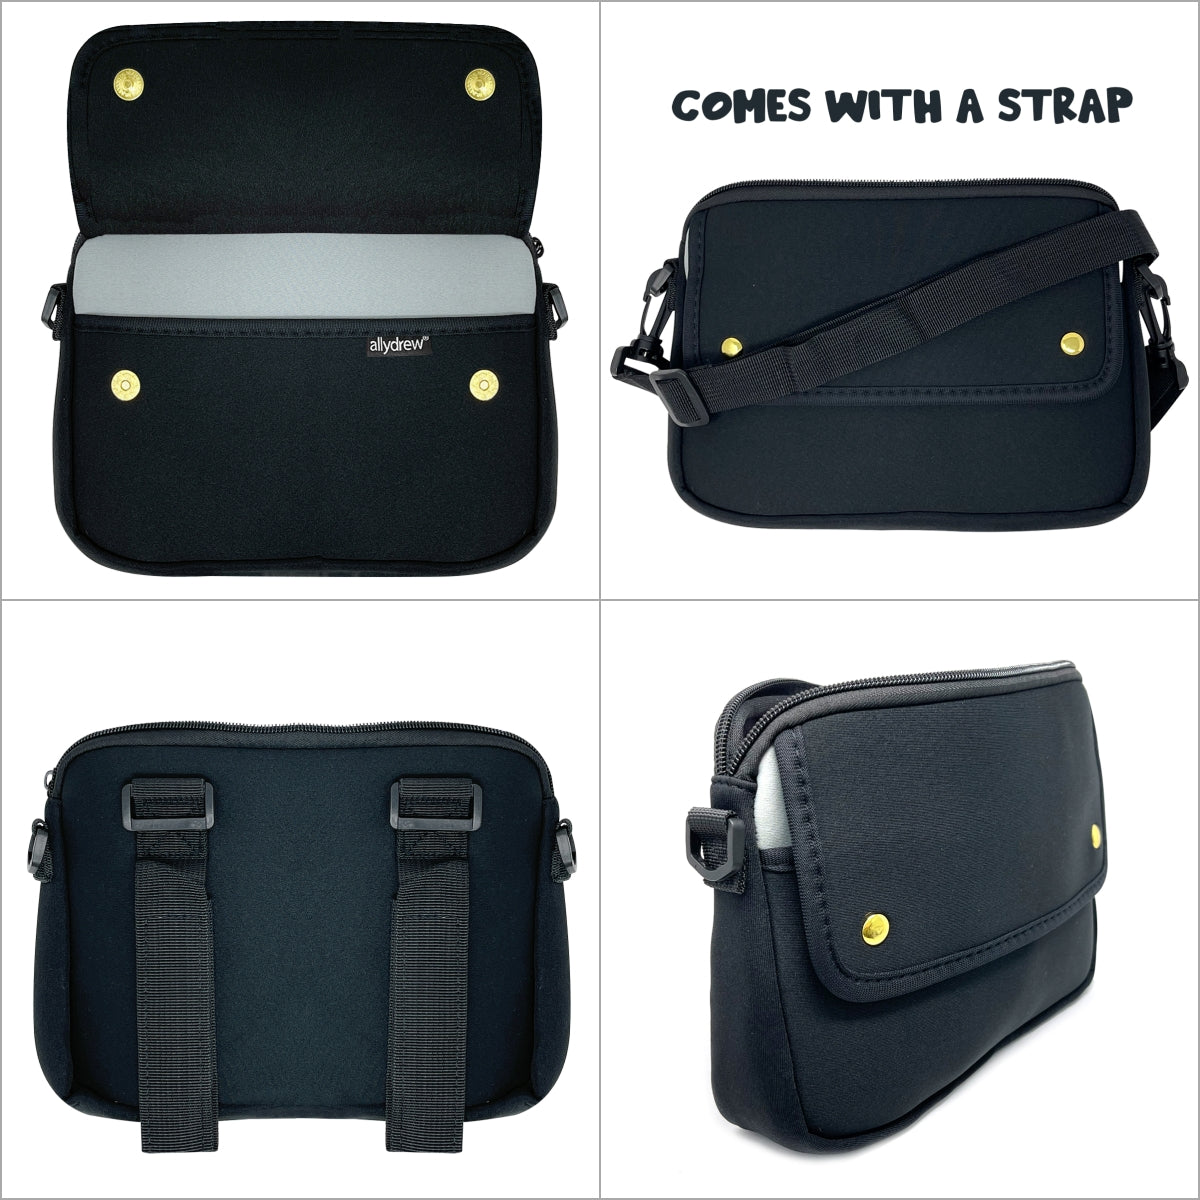 Wrapables Black Canvas Tote Bag for Women, Casual Cross Body Shoulder Handbag